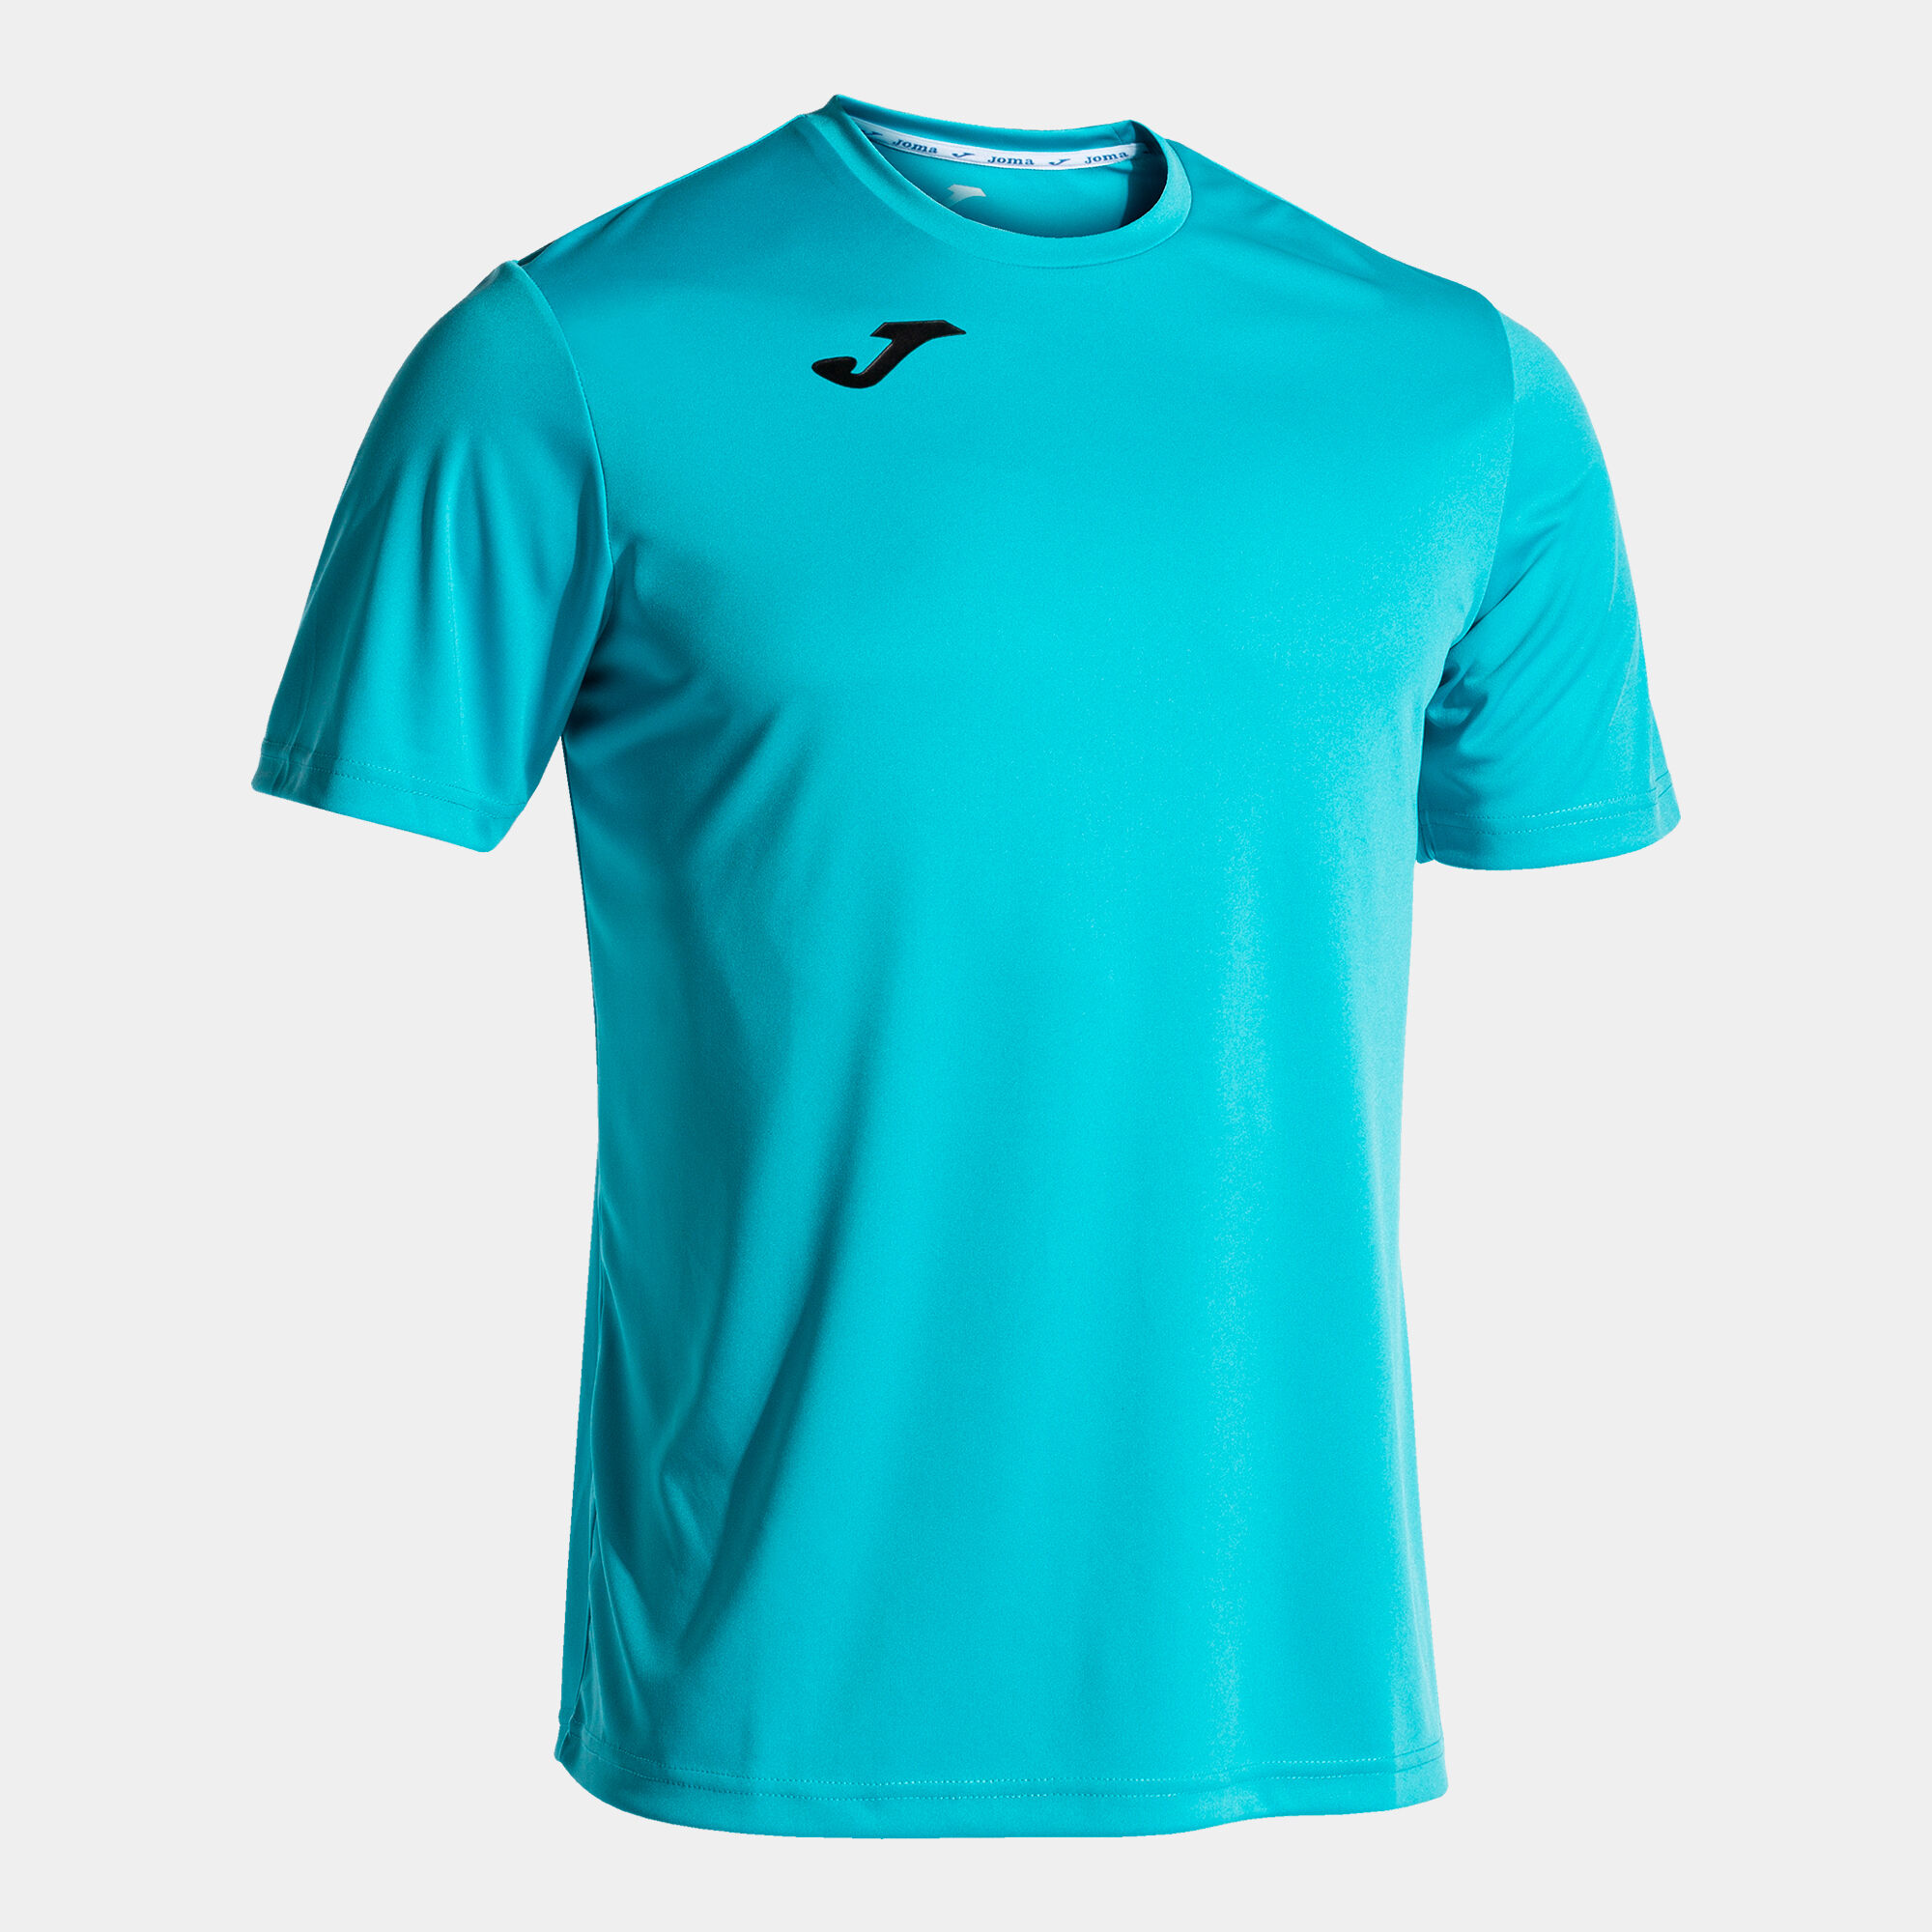 T-shirt manga curta homem Combi azul-turquesa fluorescente